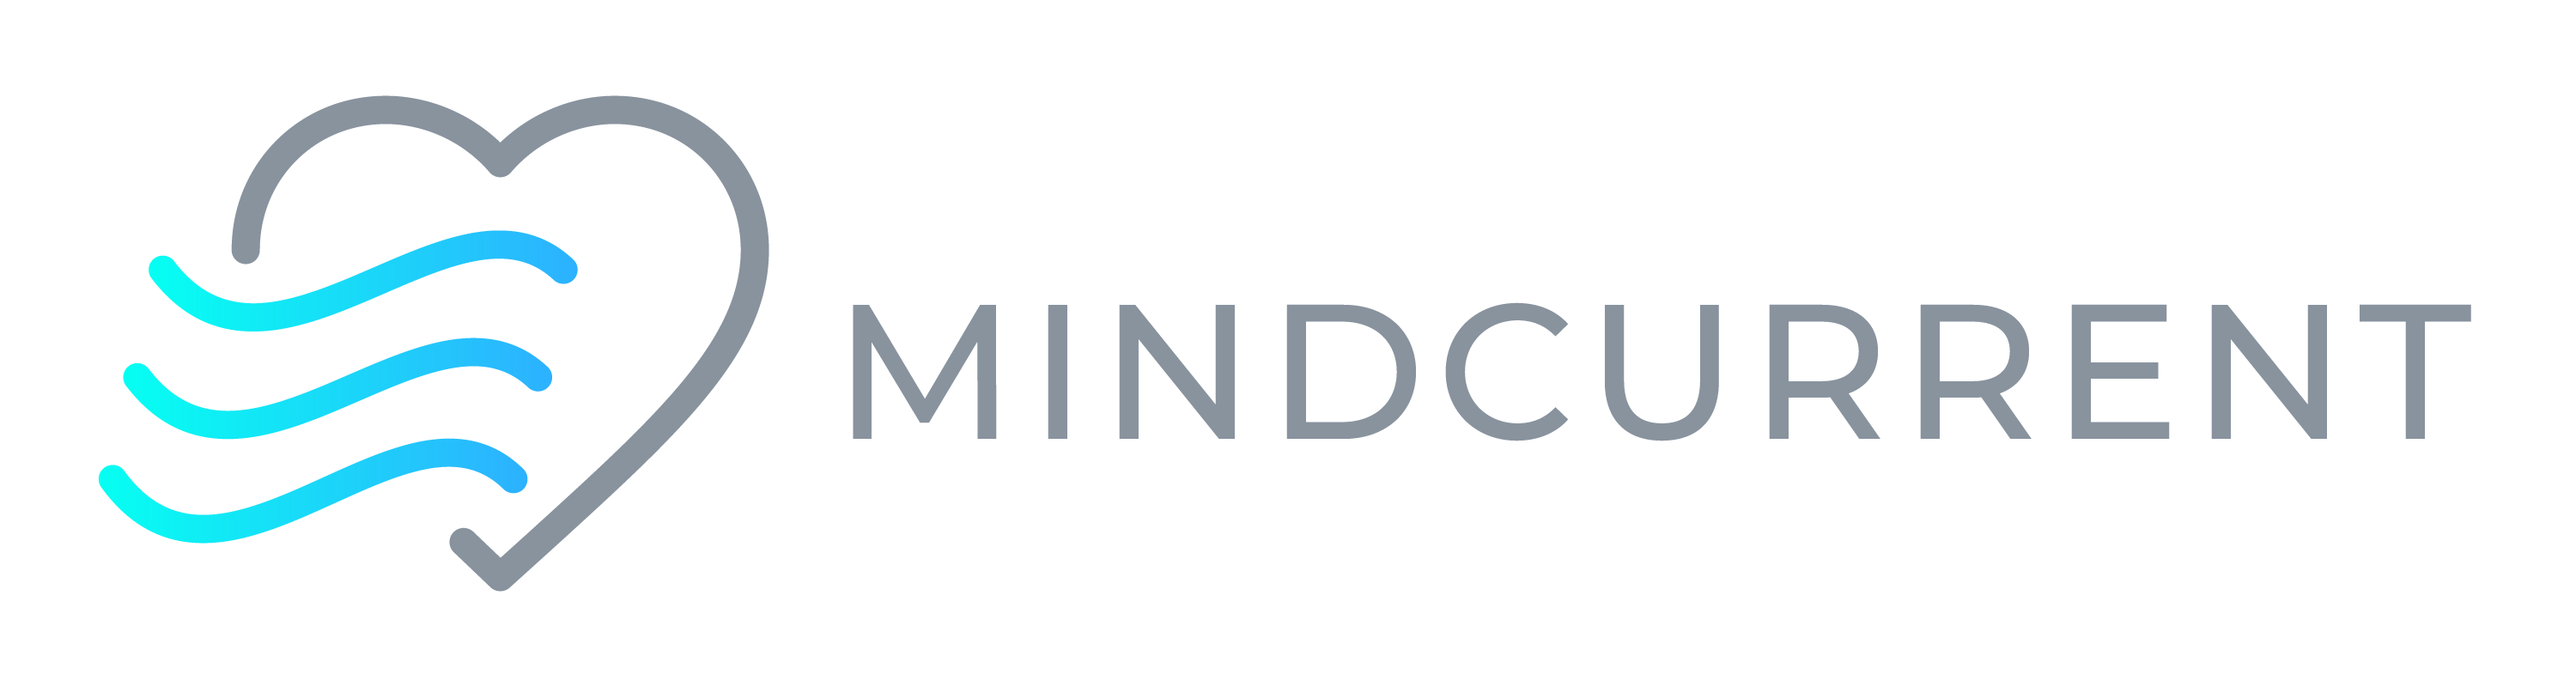 Mindcurrent logo